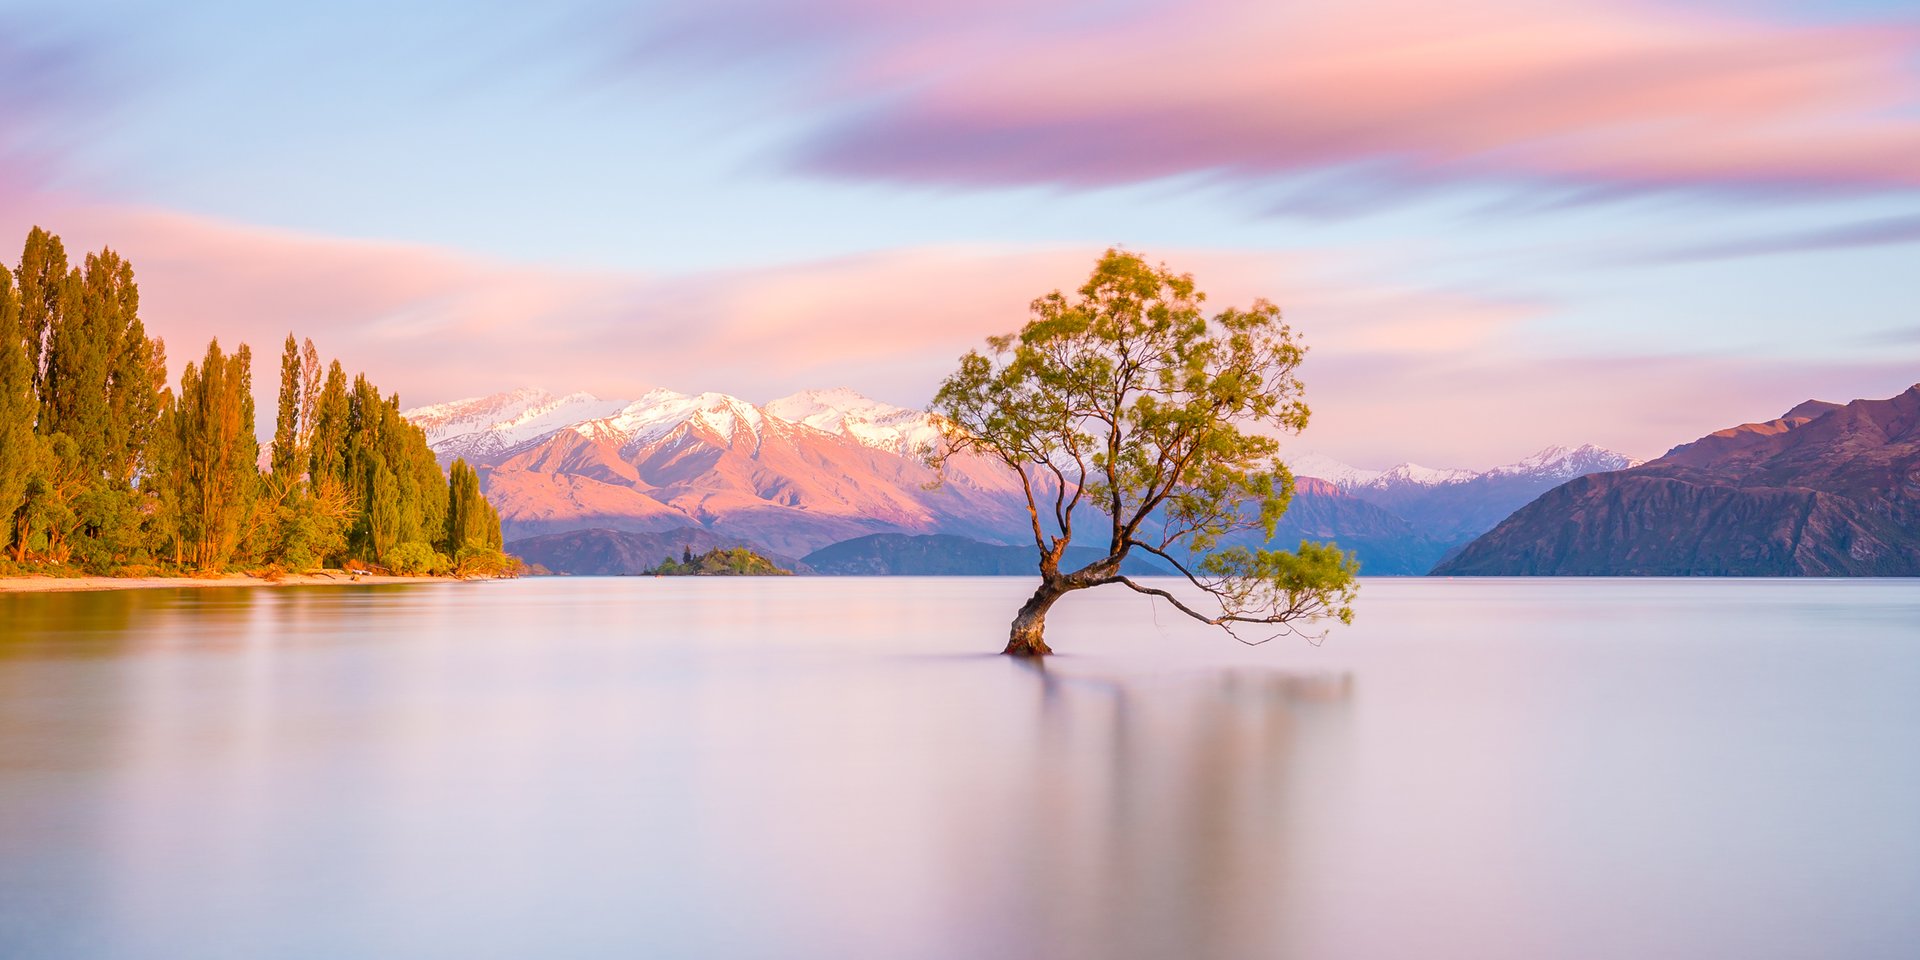 lake Wanaka, New Zealand